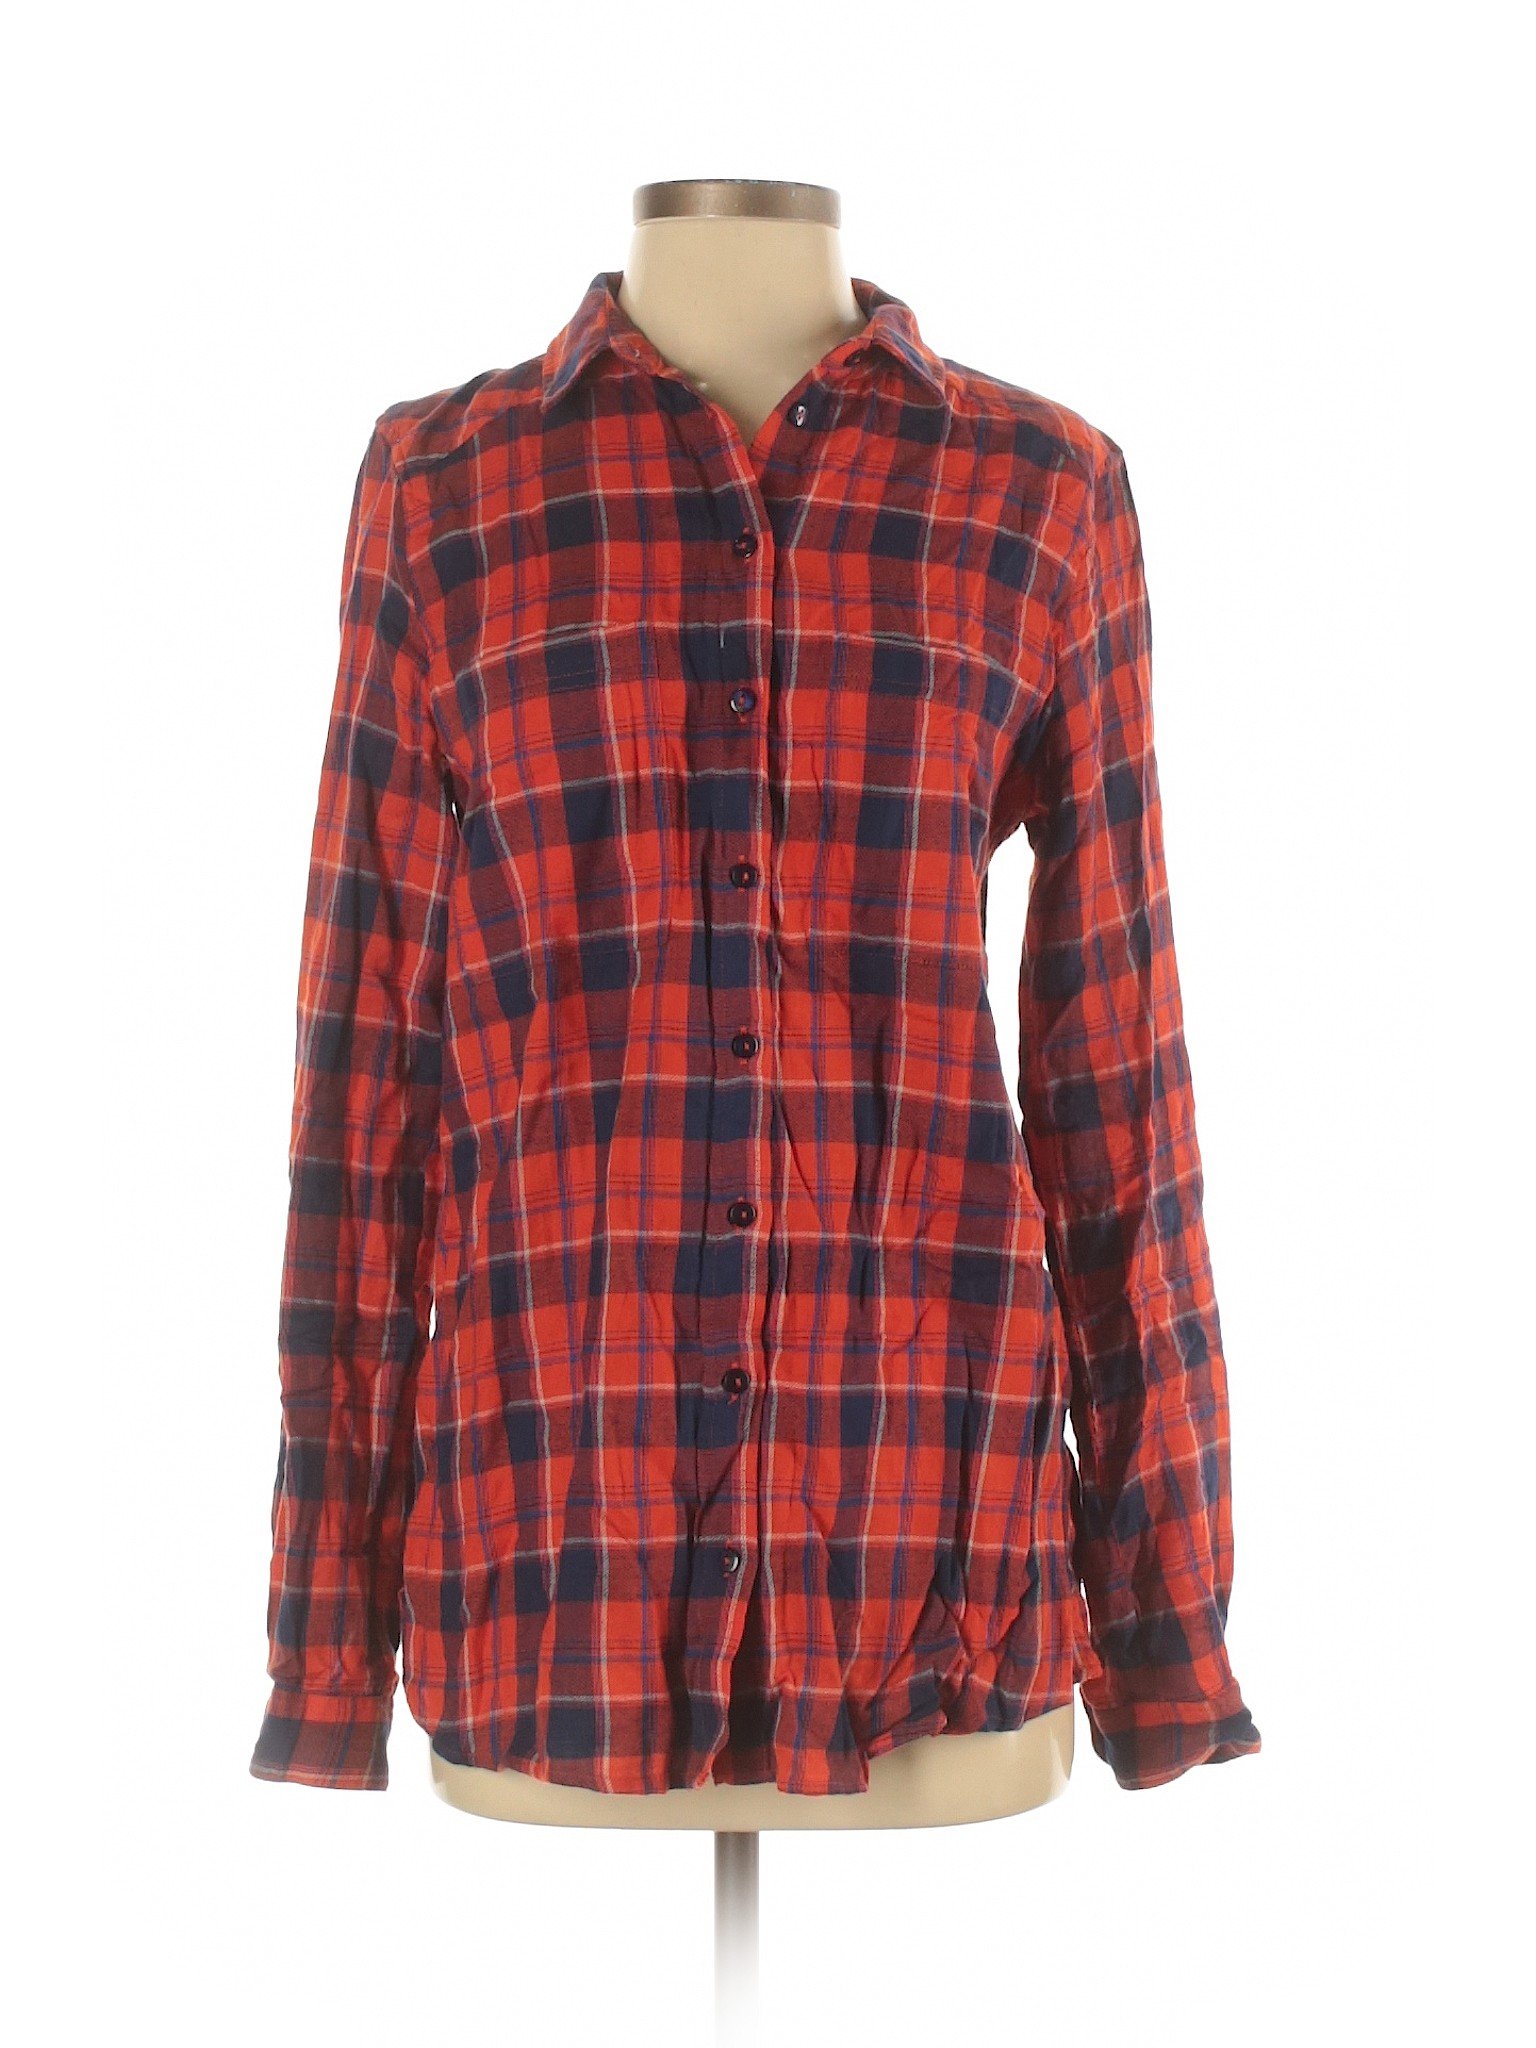 ASOS Women Red Long Sleeve Button-Down Shirt 4 | eBay